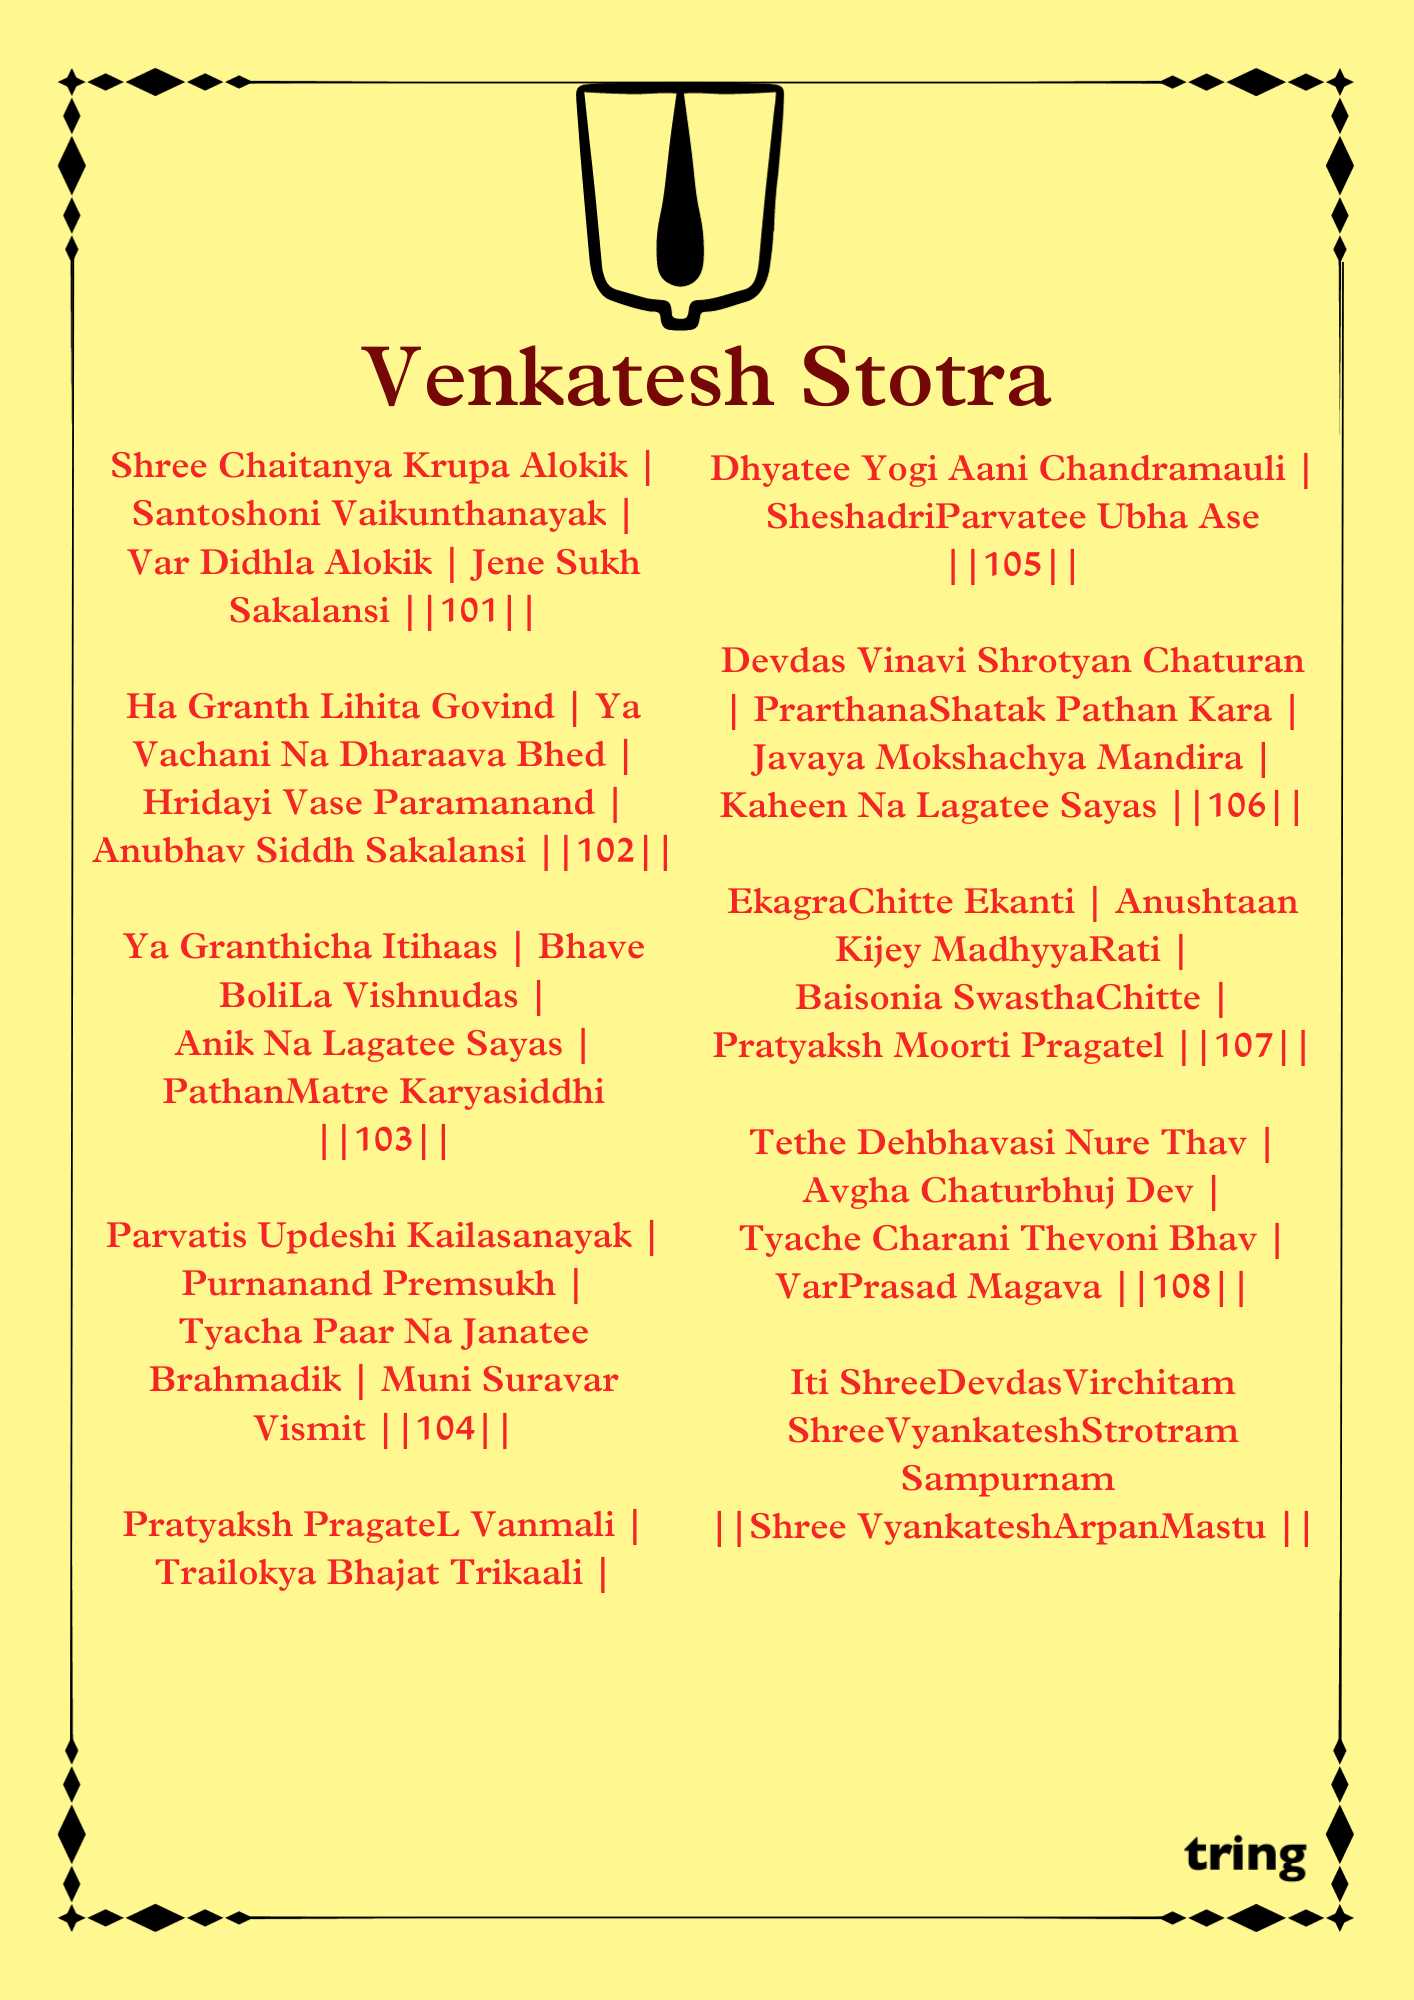 Venkatesh Stotra Images